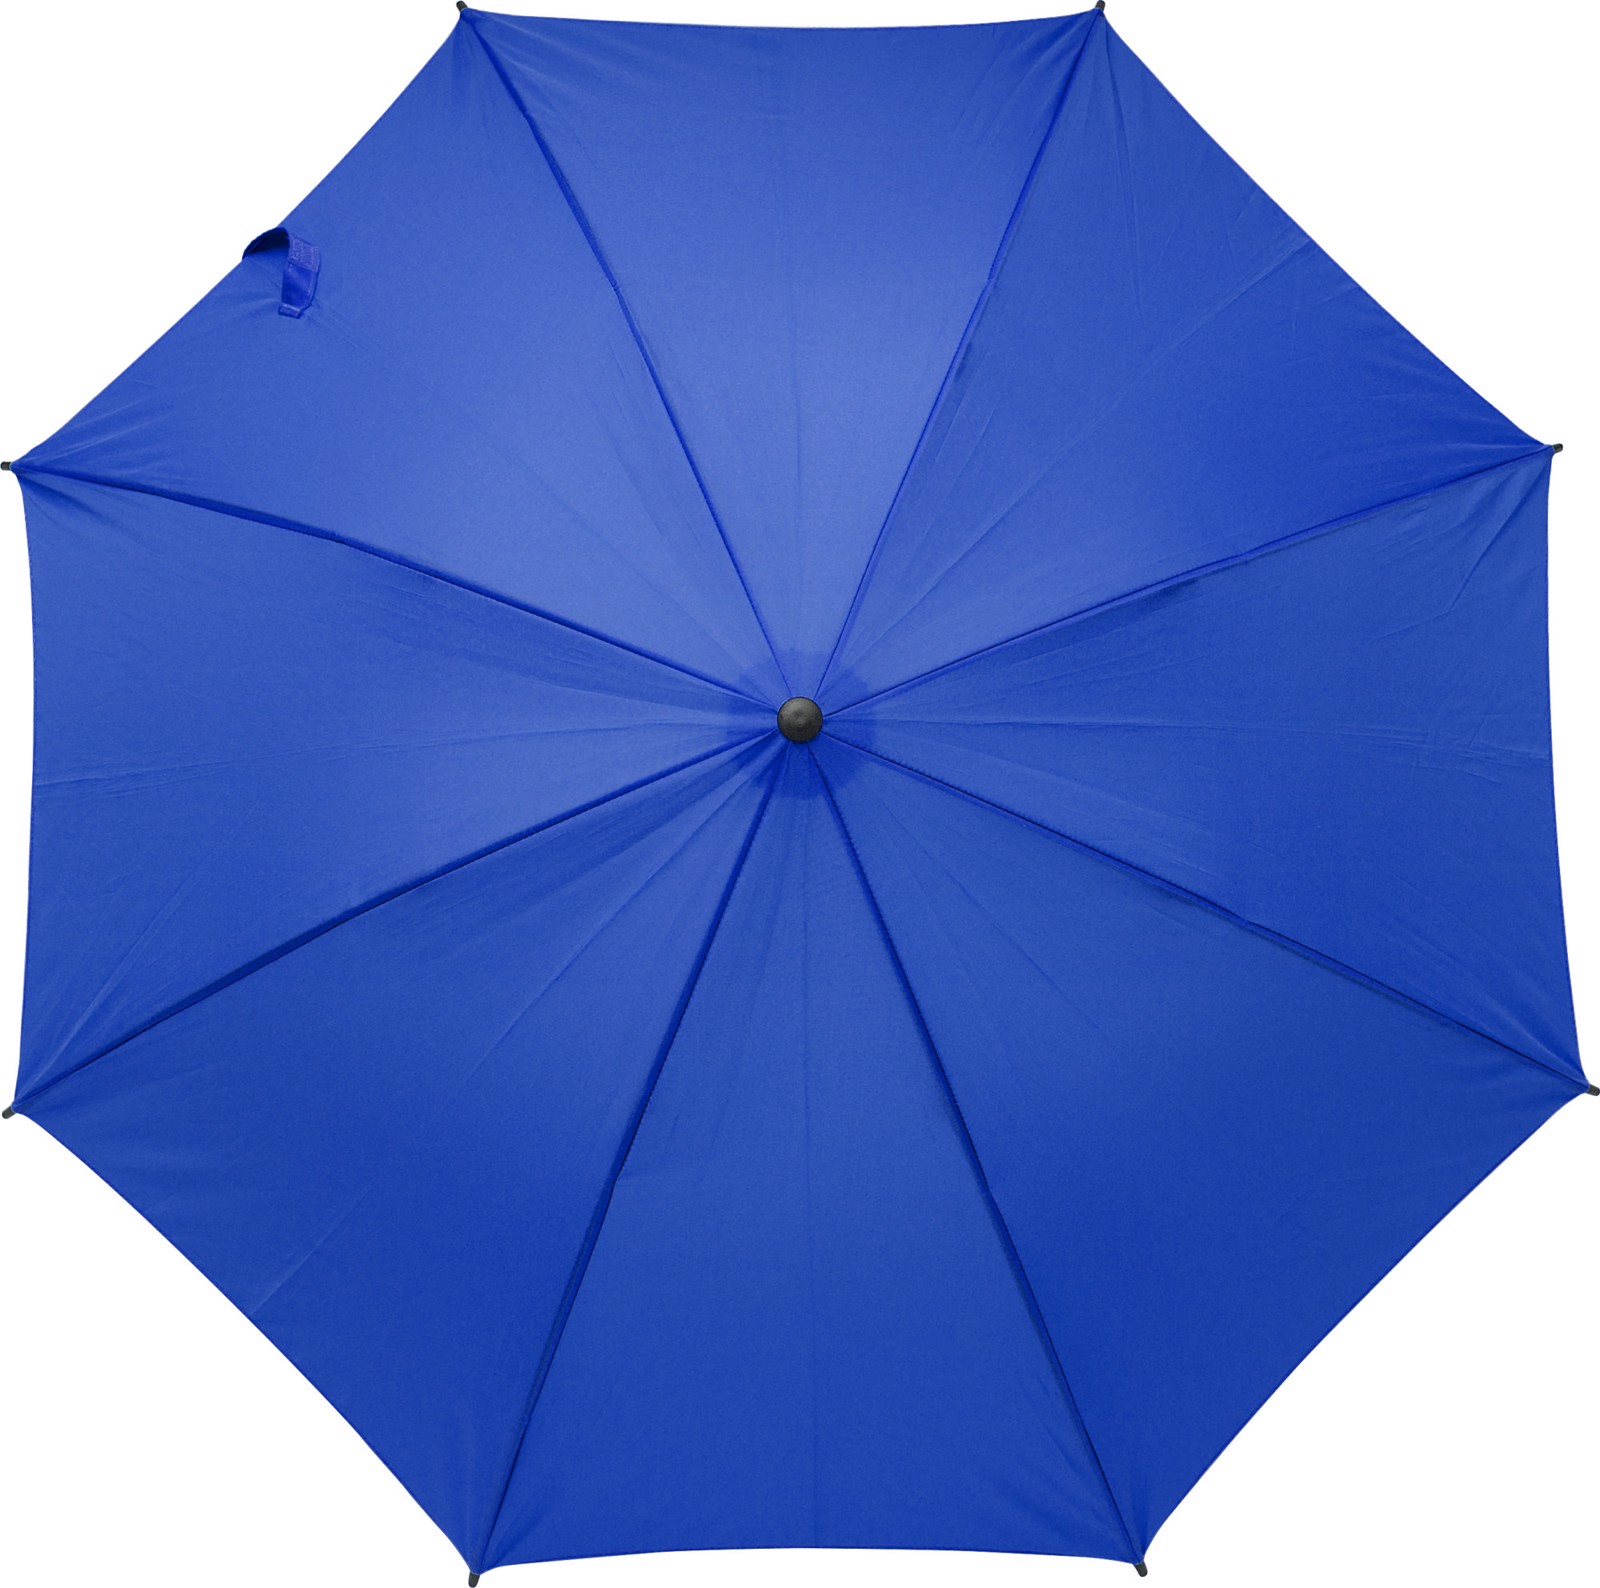 Pongee (190T) umbrella - Cobalt Blue